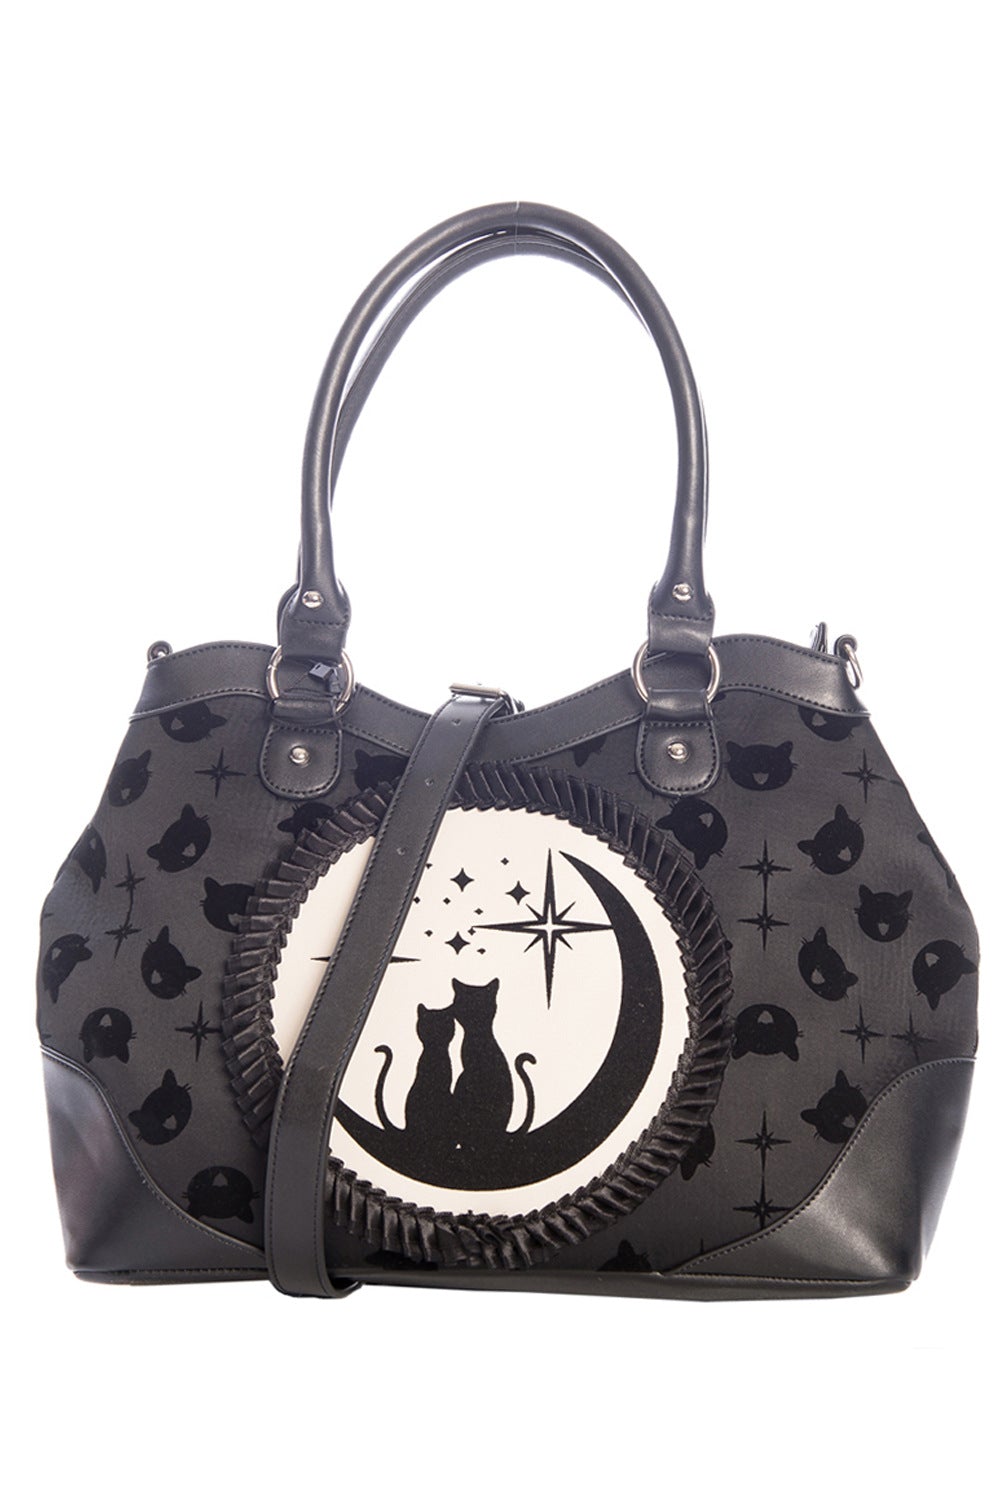 Banned Alternative Lunar Sisters Cat Bowler Handbag